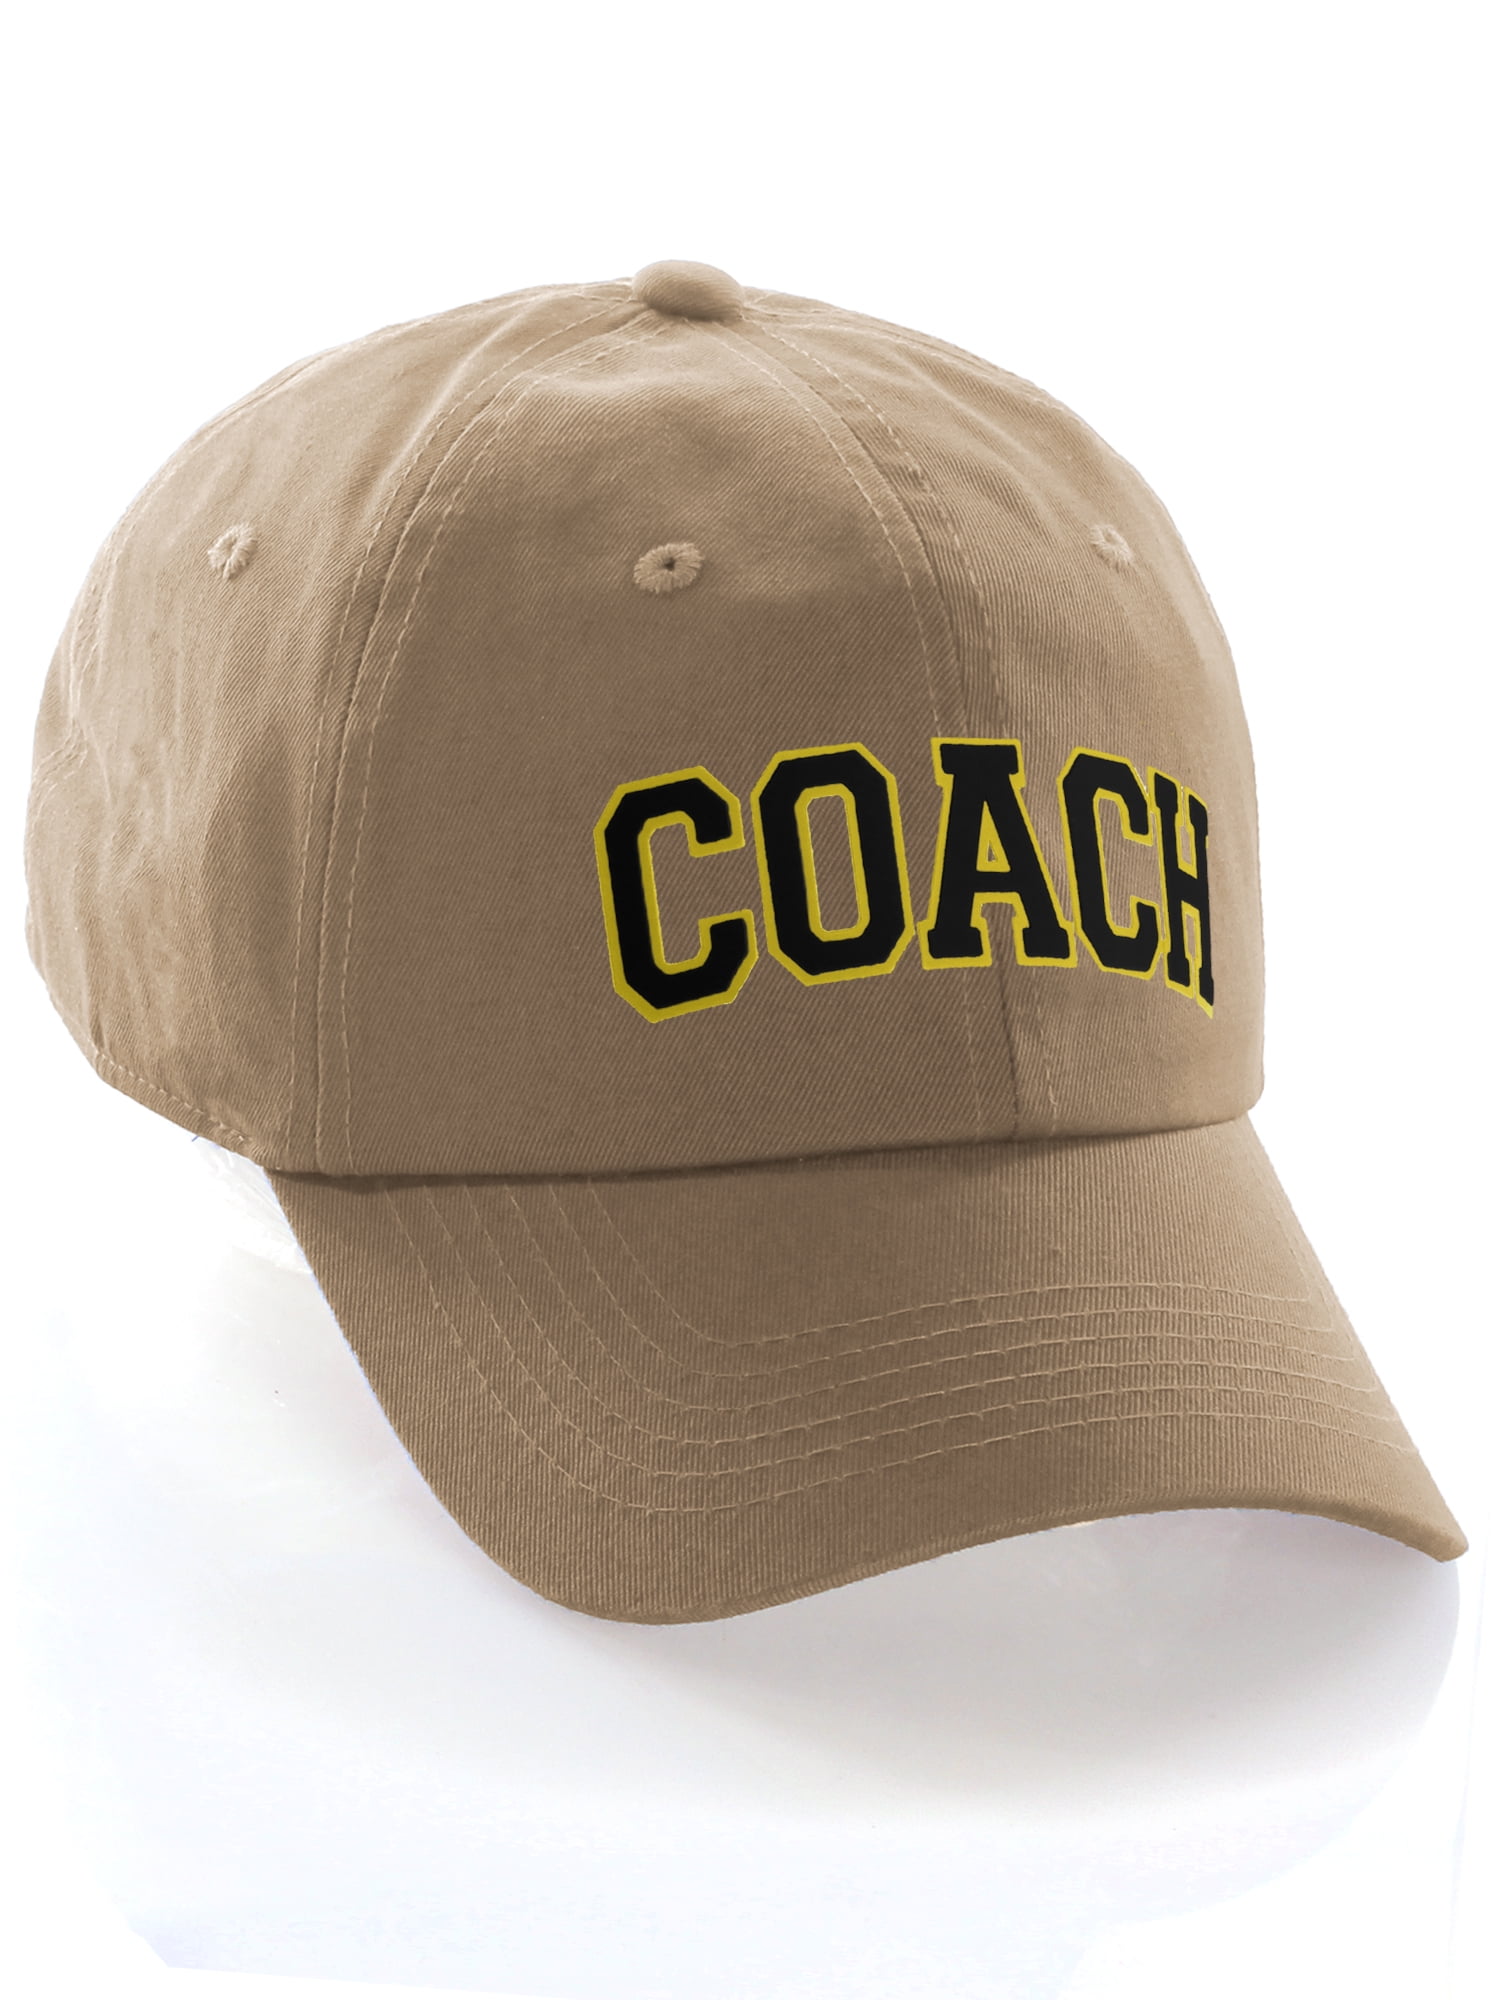 sports team hats